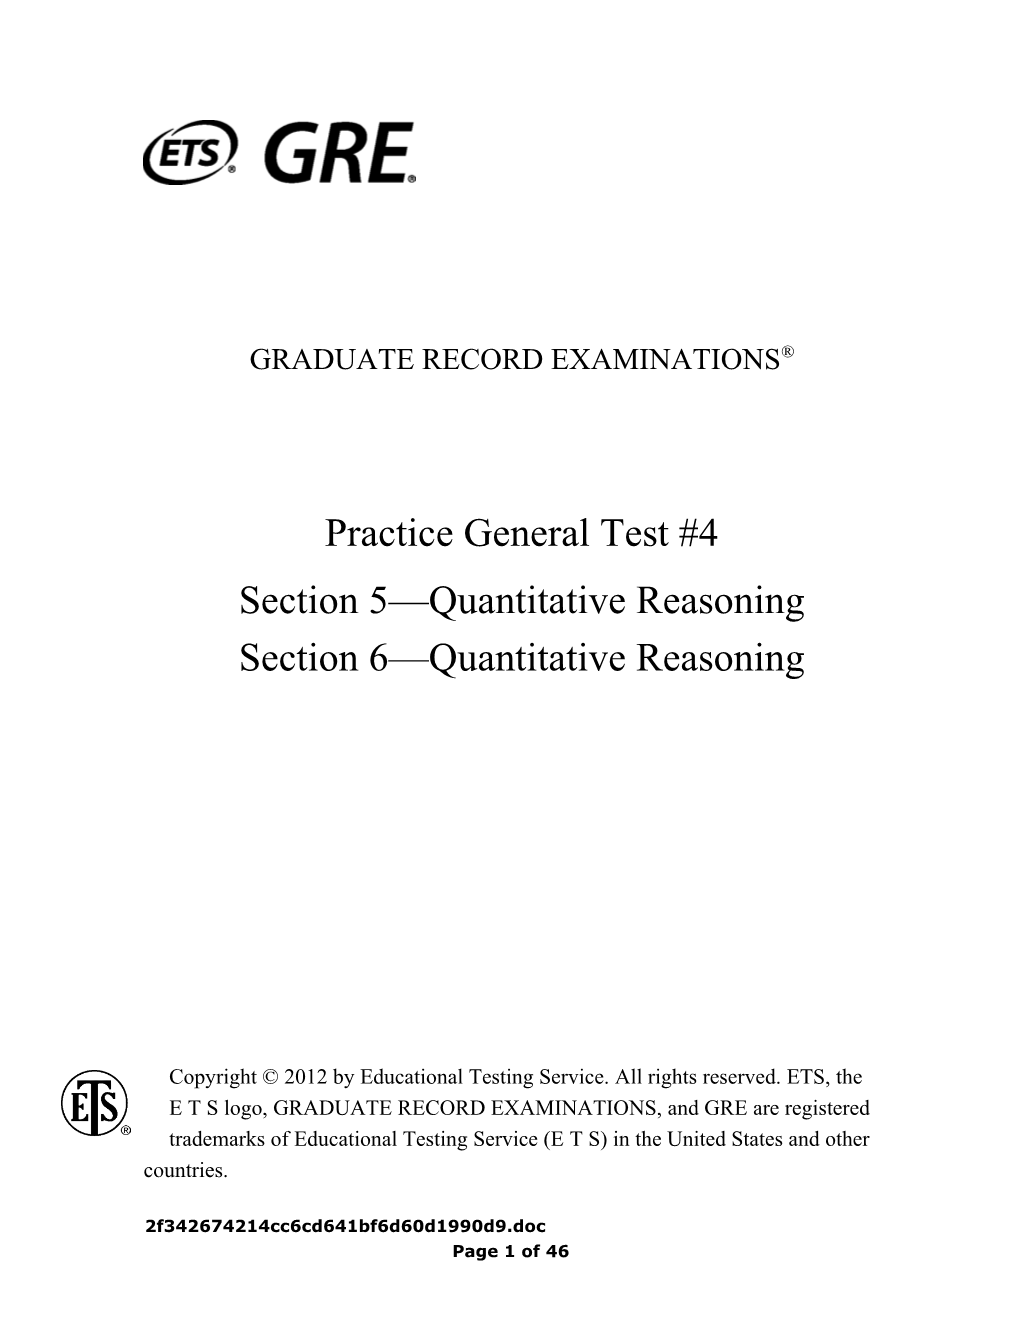 Graduate Record Examinations